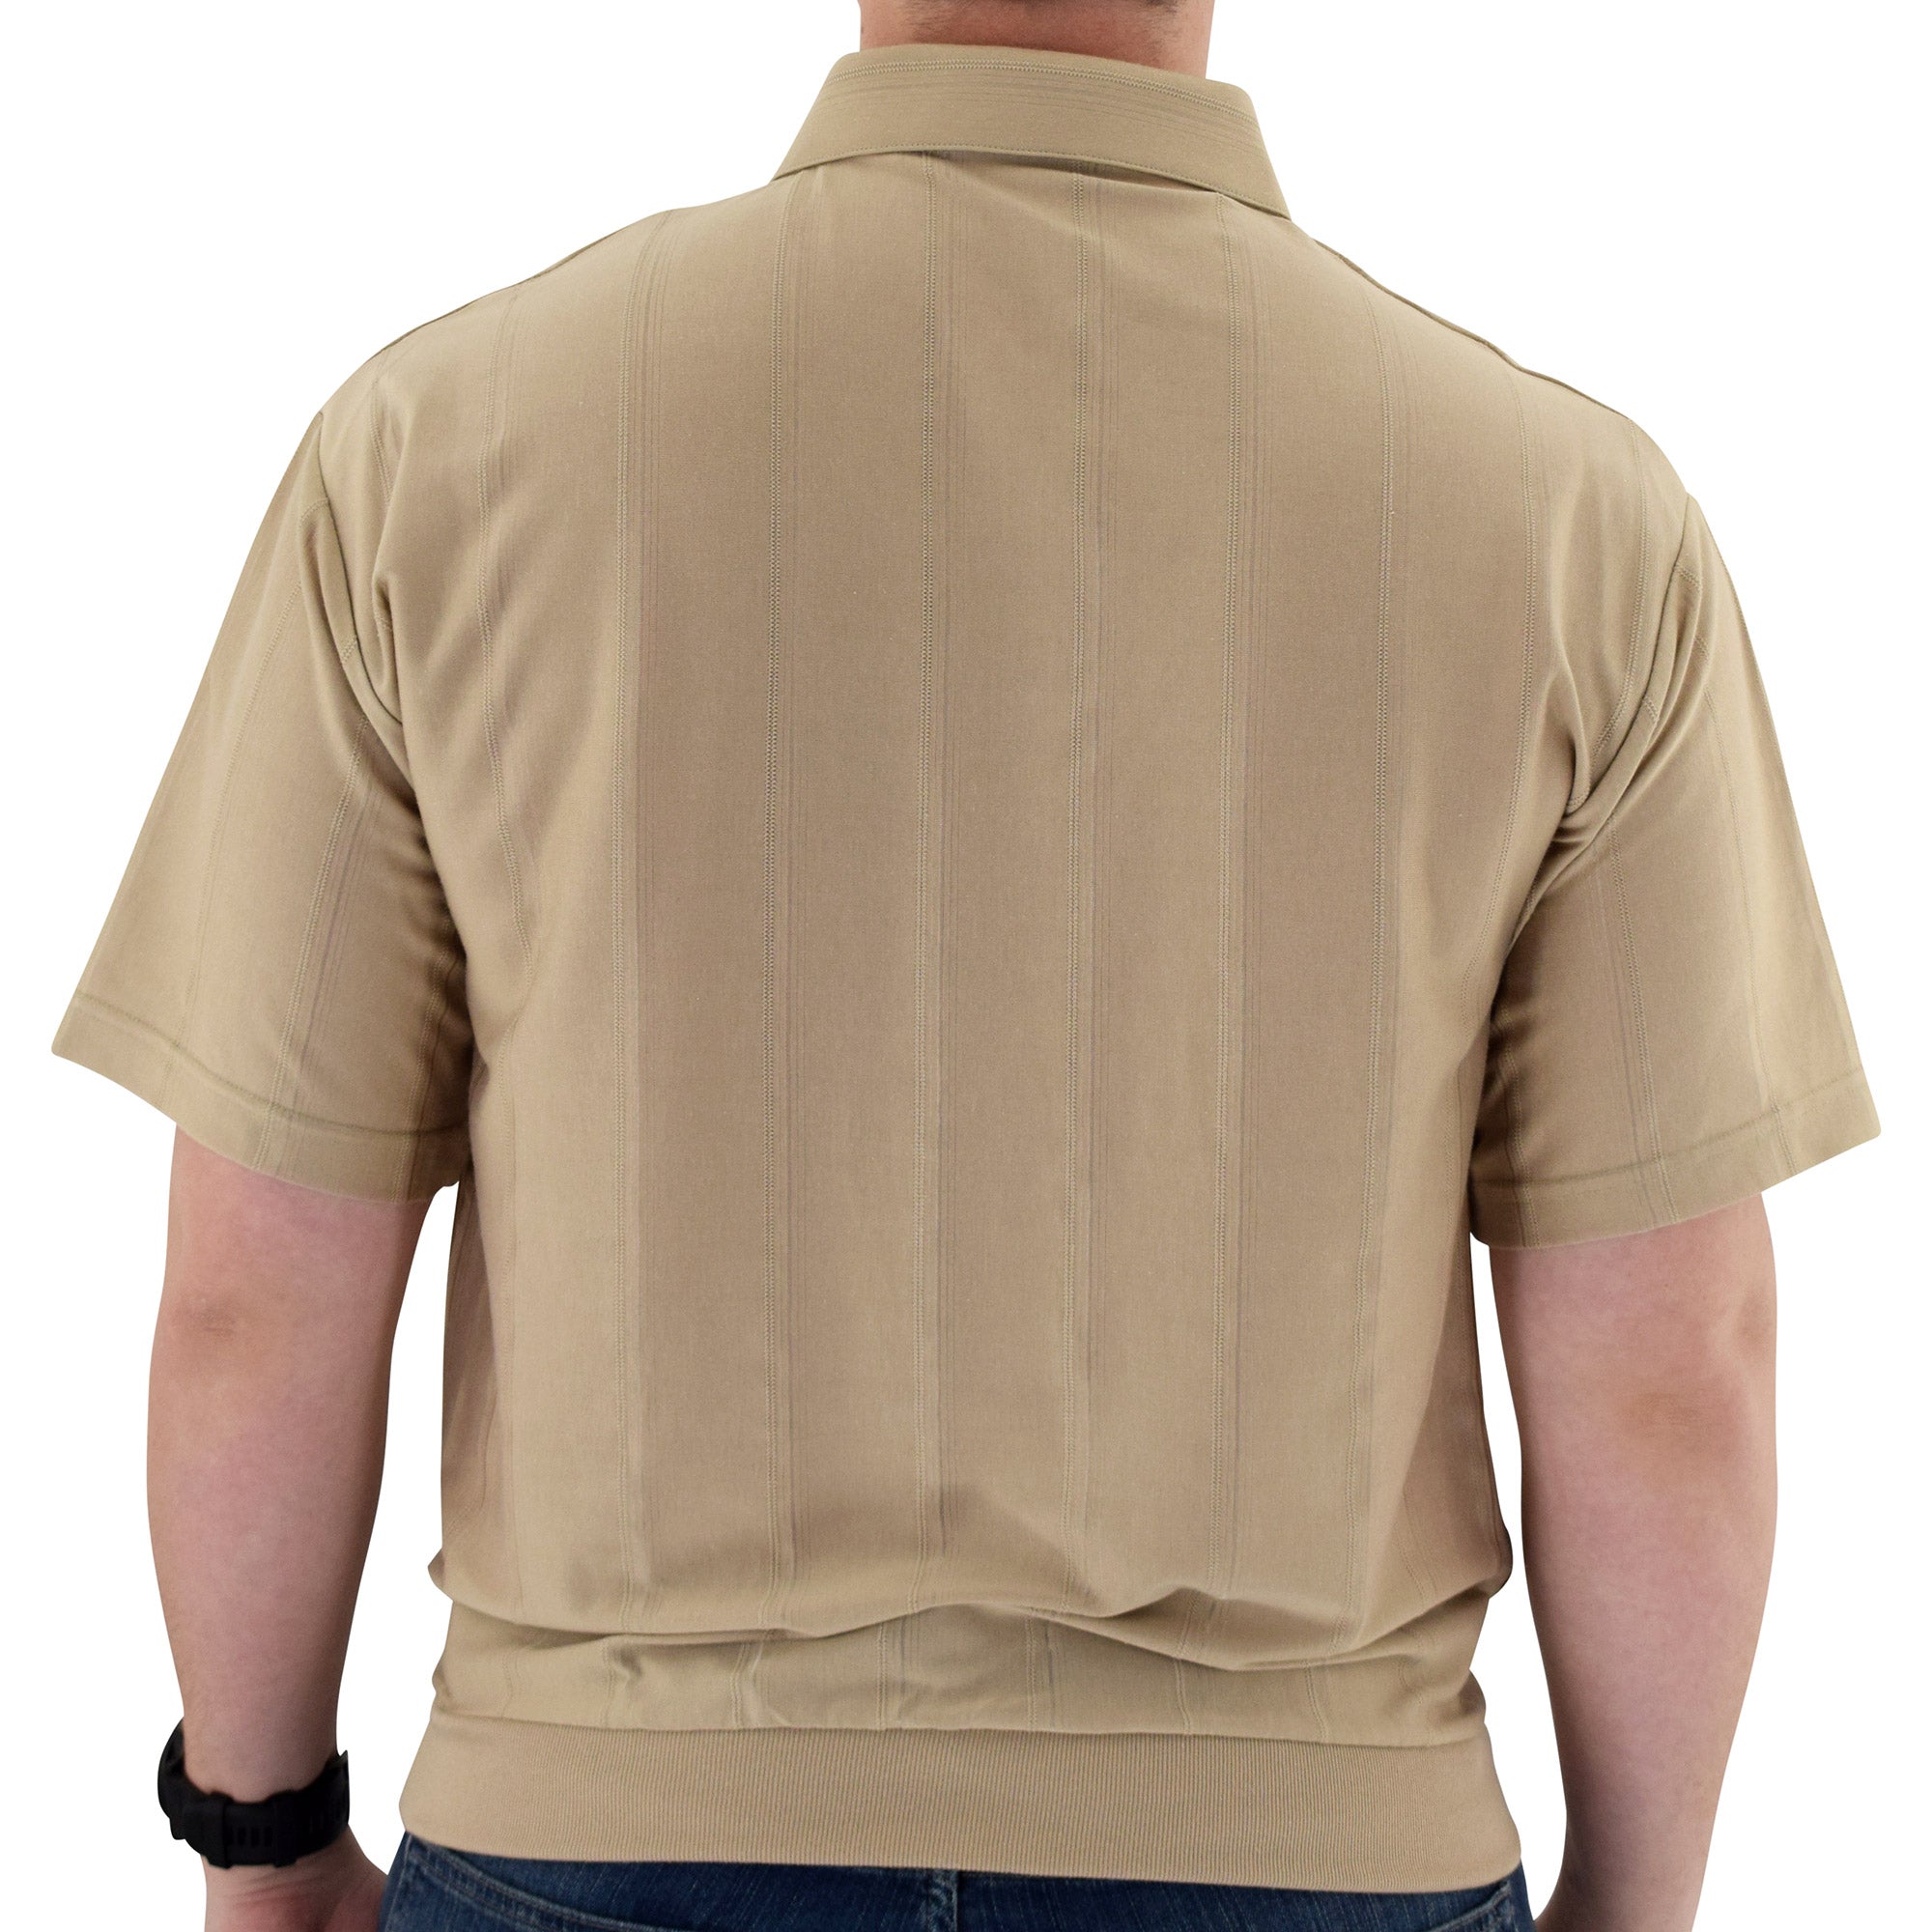 LD Sport Tone on Tone Textured Knit Short Sleeve Banded Bottom Shirt 6010-16 Taupe - theflagshirt